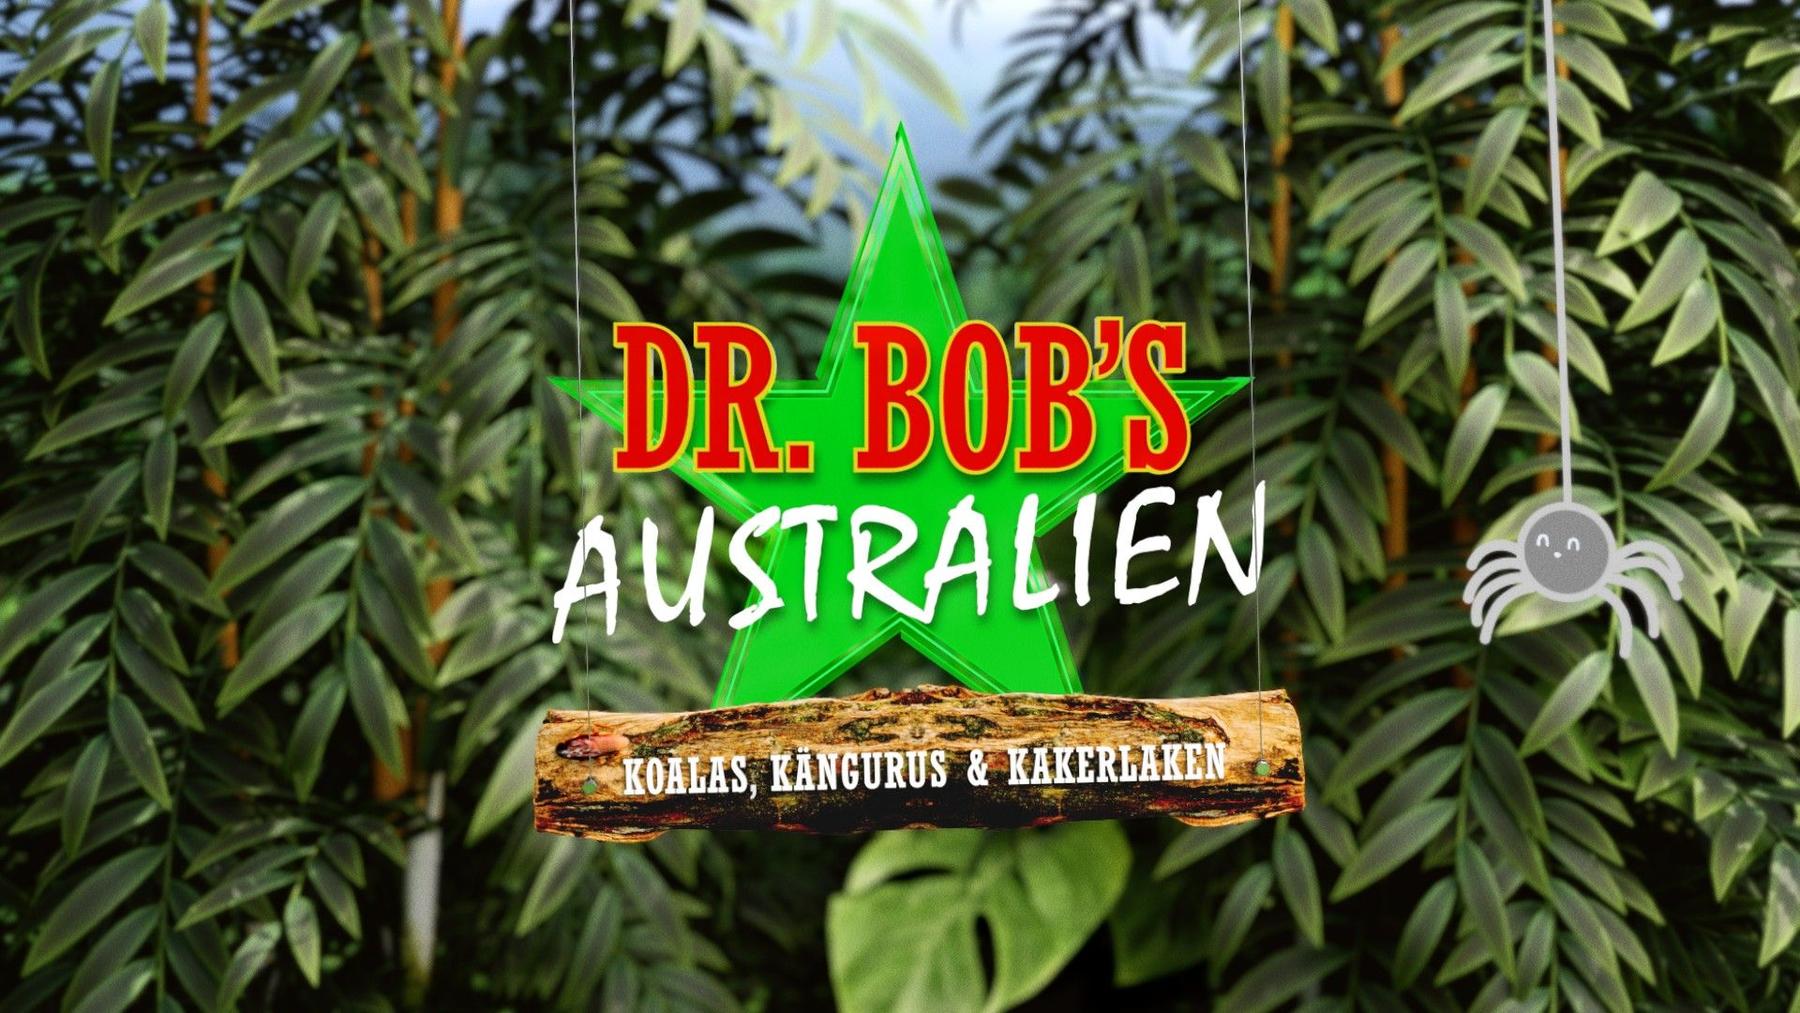 Dr. Bob's Australien